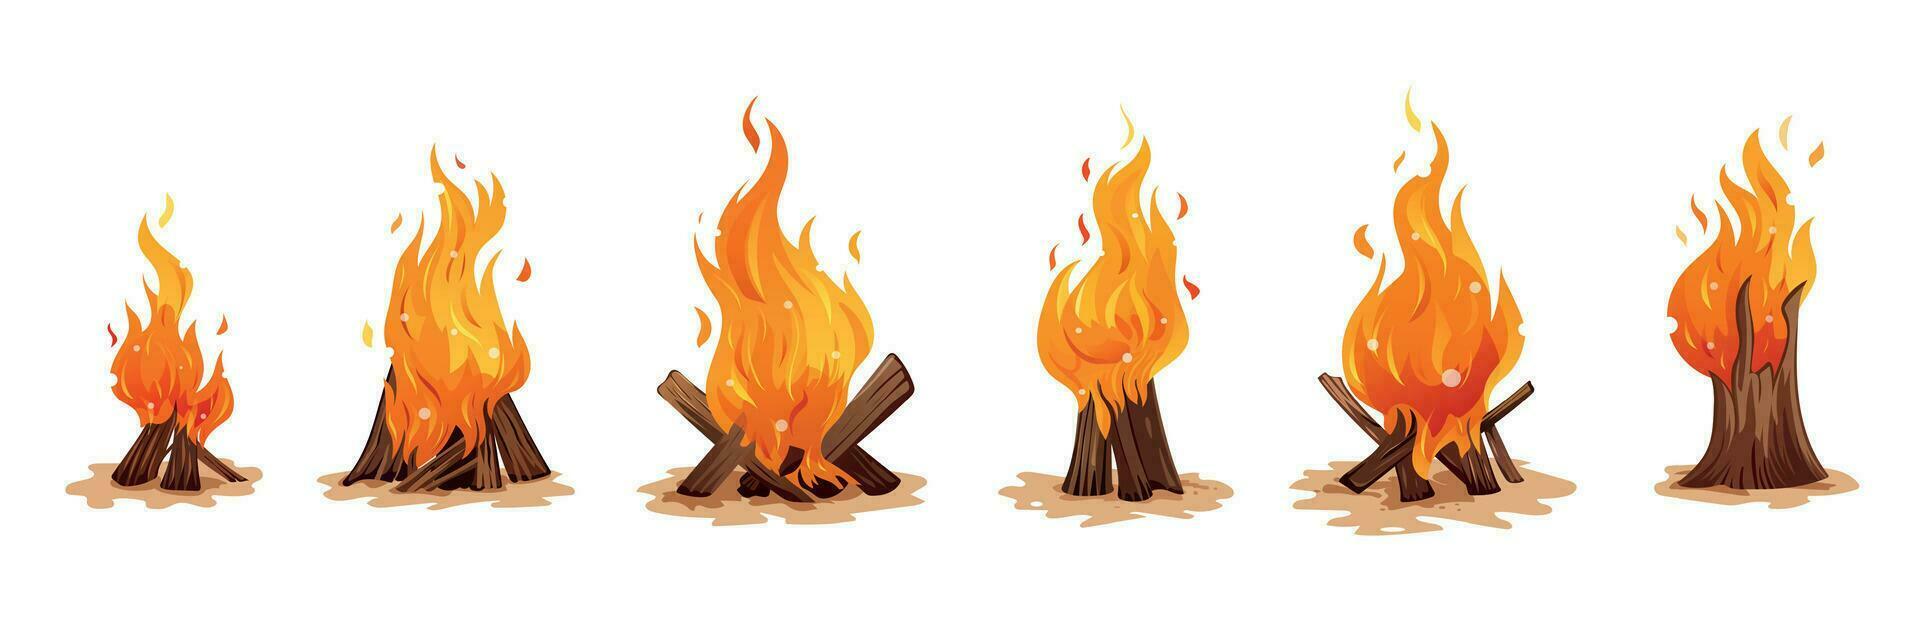 Set of Camping Burning Bonfires. Kindled Flame. Burning Firewood. Vector illustration in cartoon style.